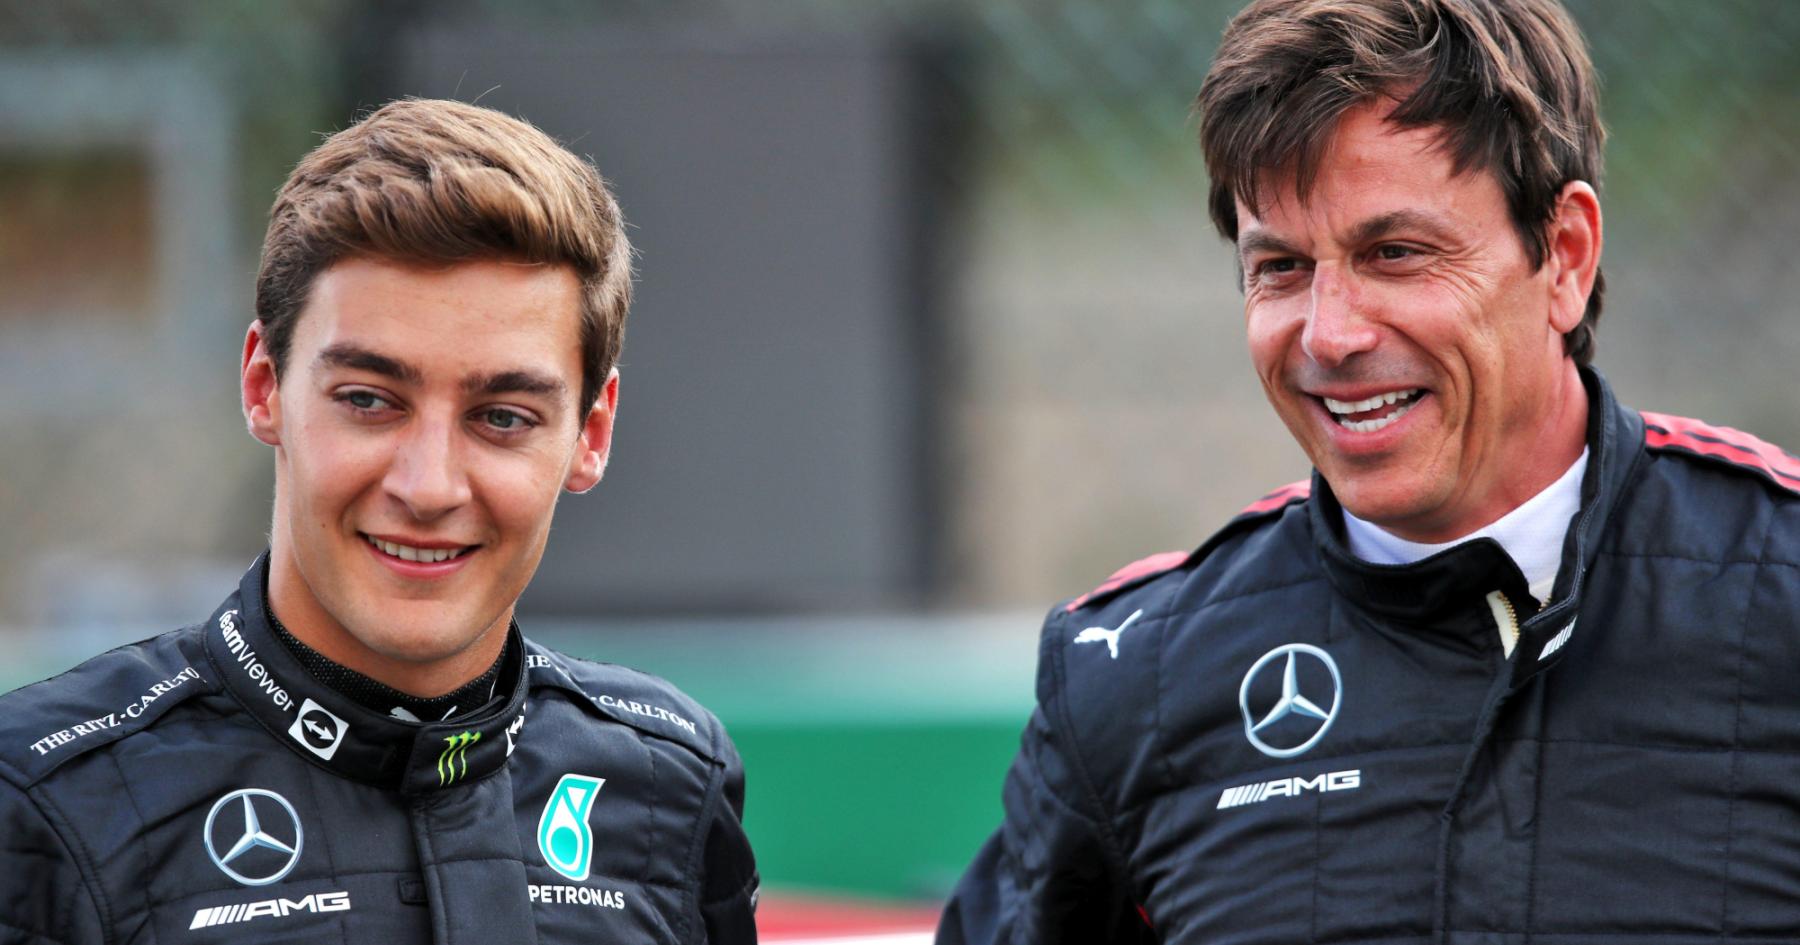 Russell Enthusiastically Endorses Mercedes' Progress